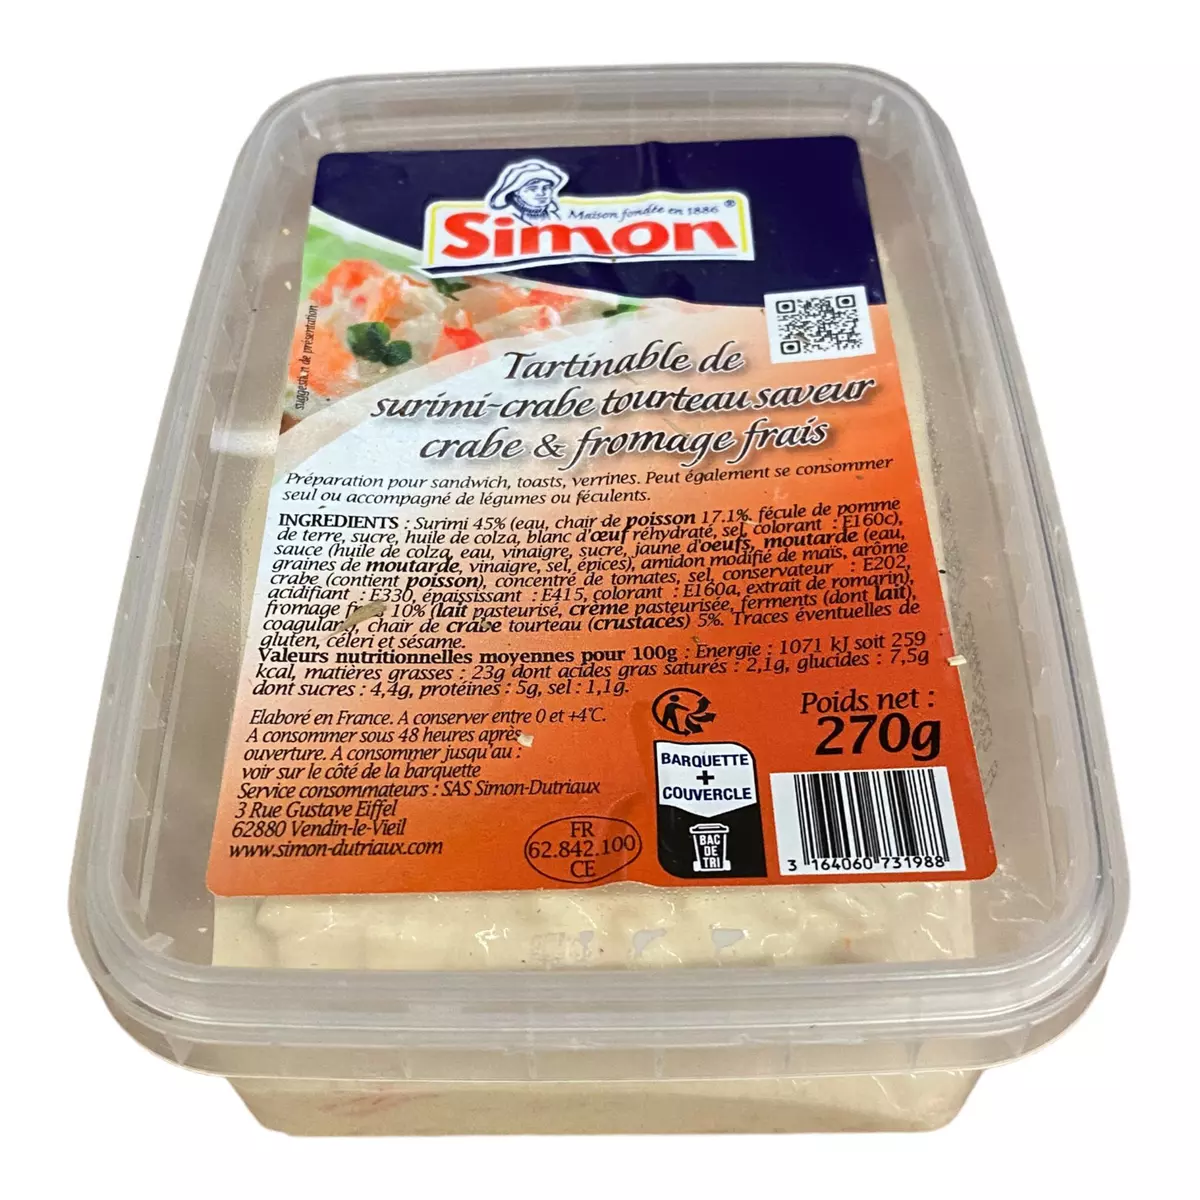 SIMON Tartinable de surimi crabe tourteau saveur crabe & fromage frais 270g